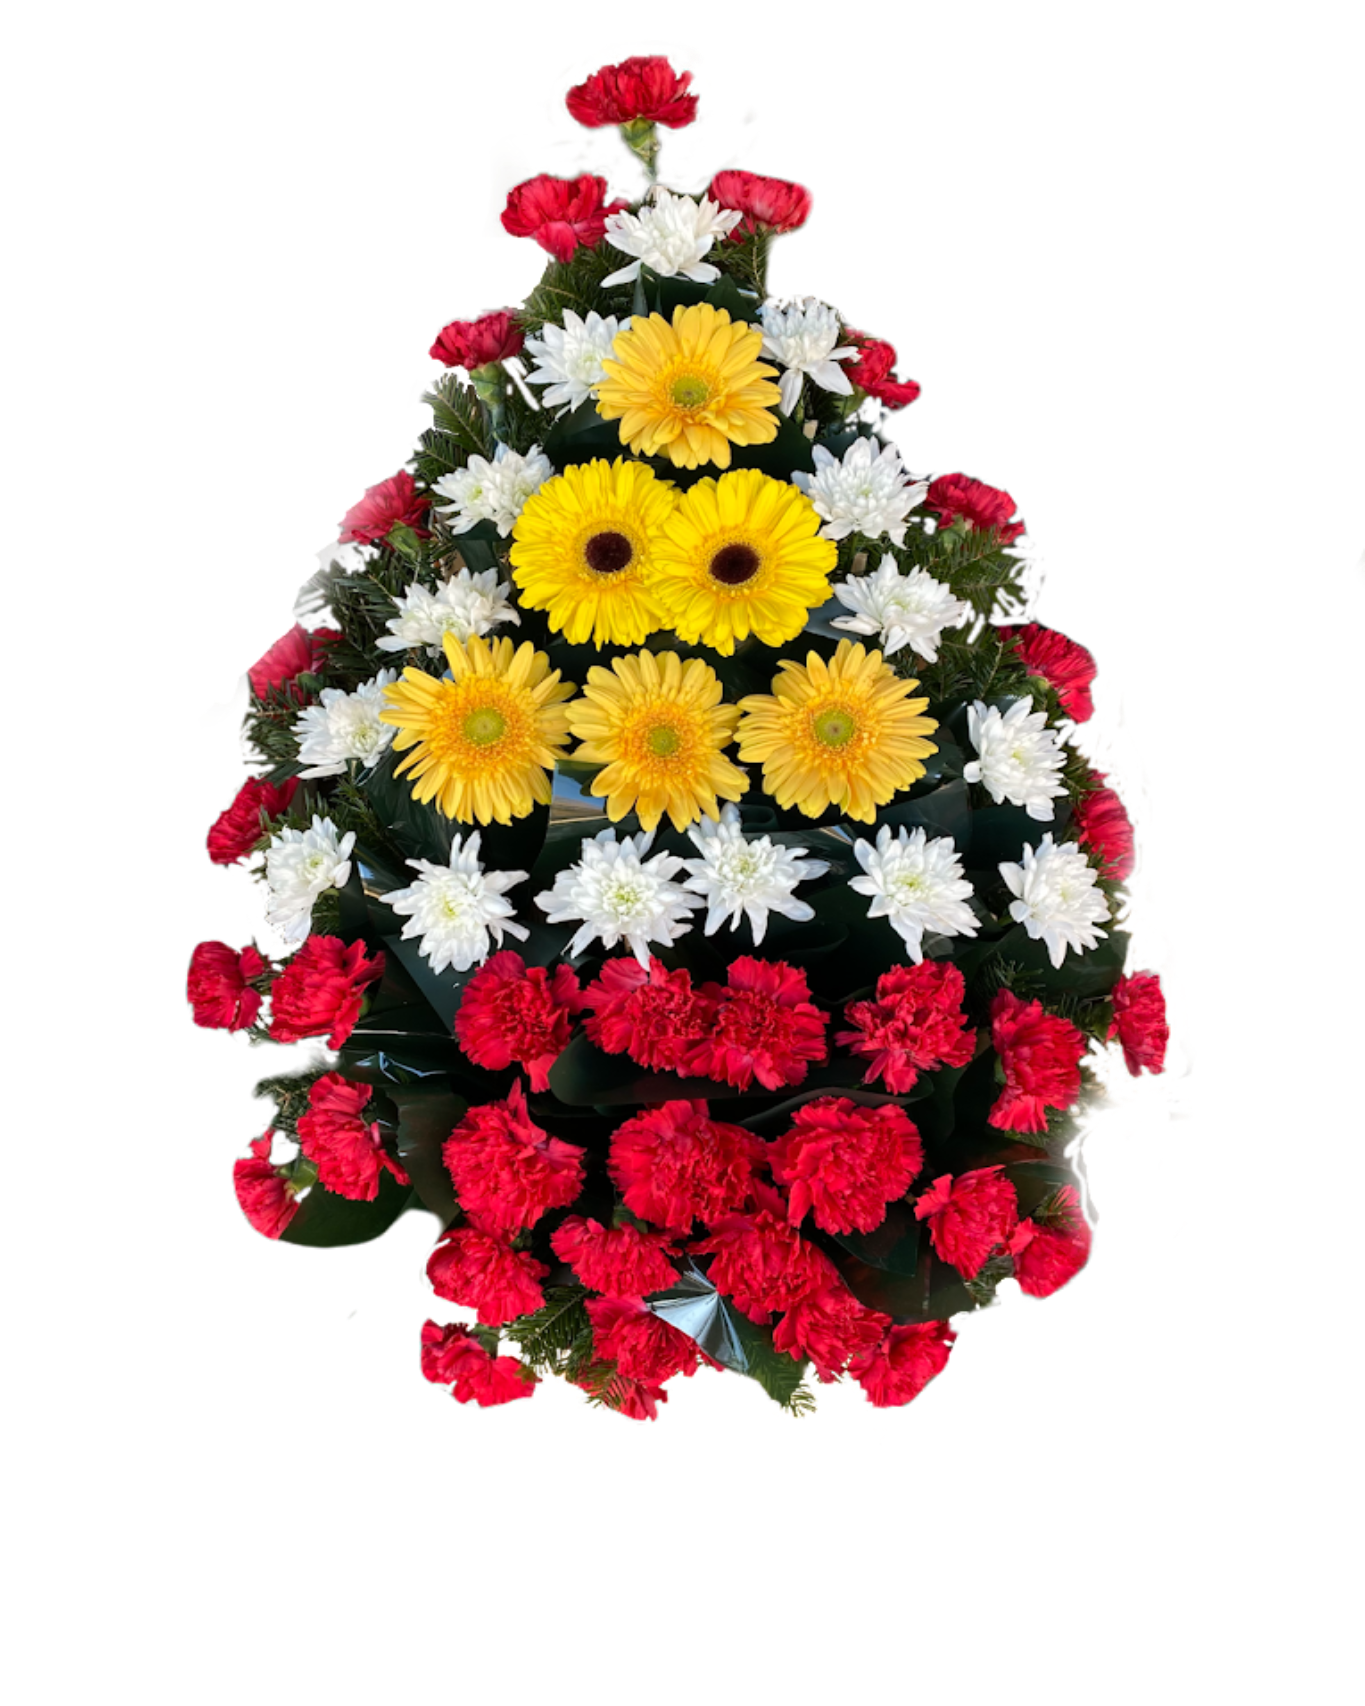 coroana funerara naturala realizata din jerbera galbena si crizanteme albe si garoafe rosii